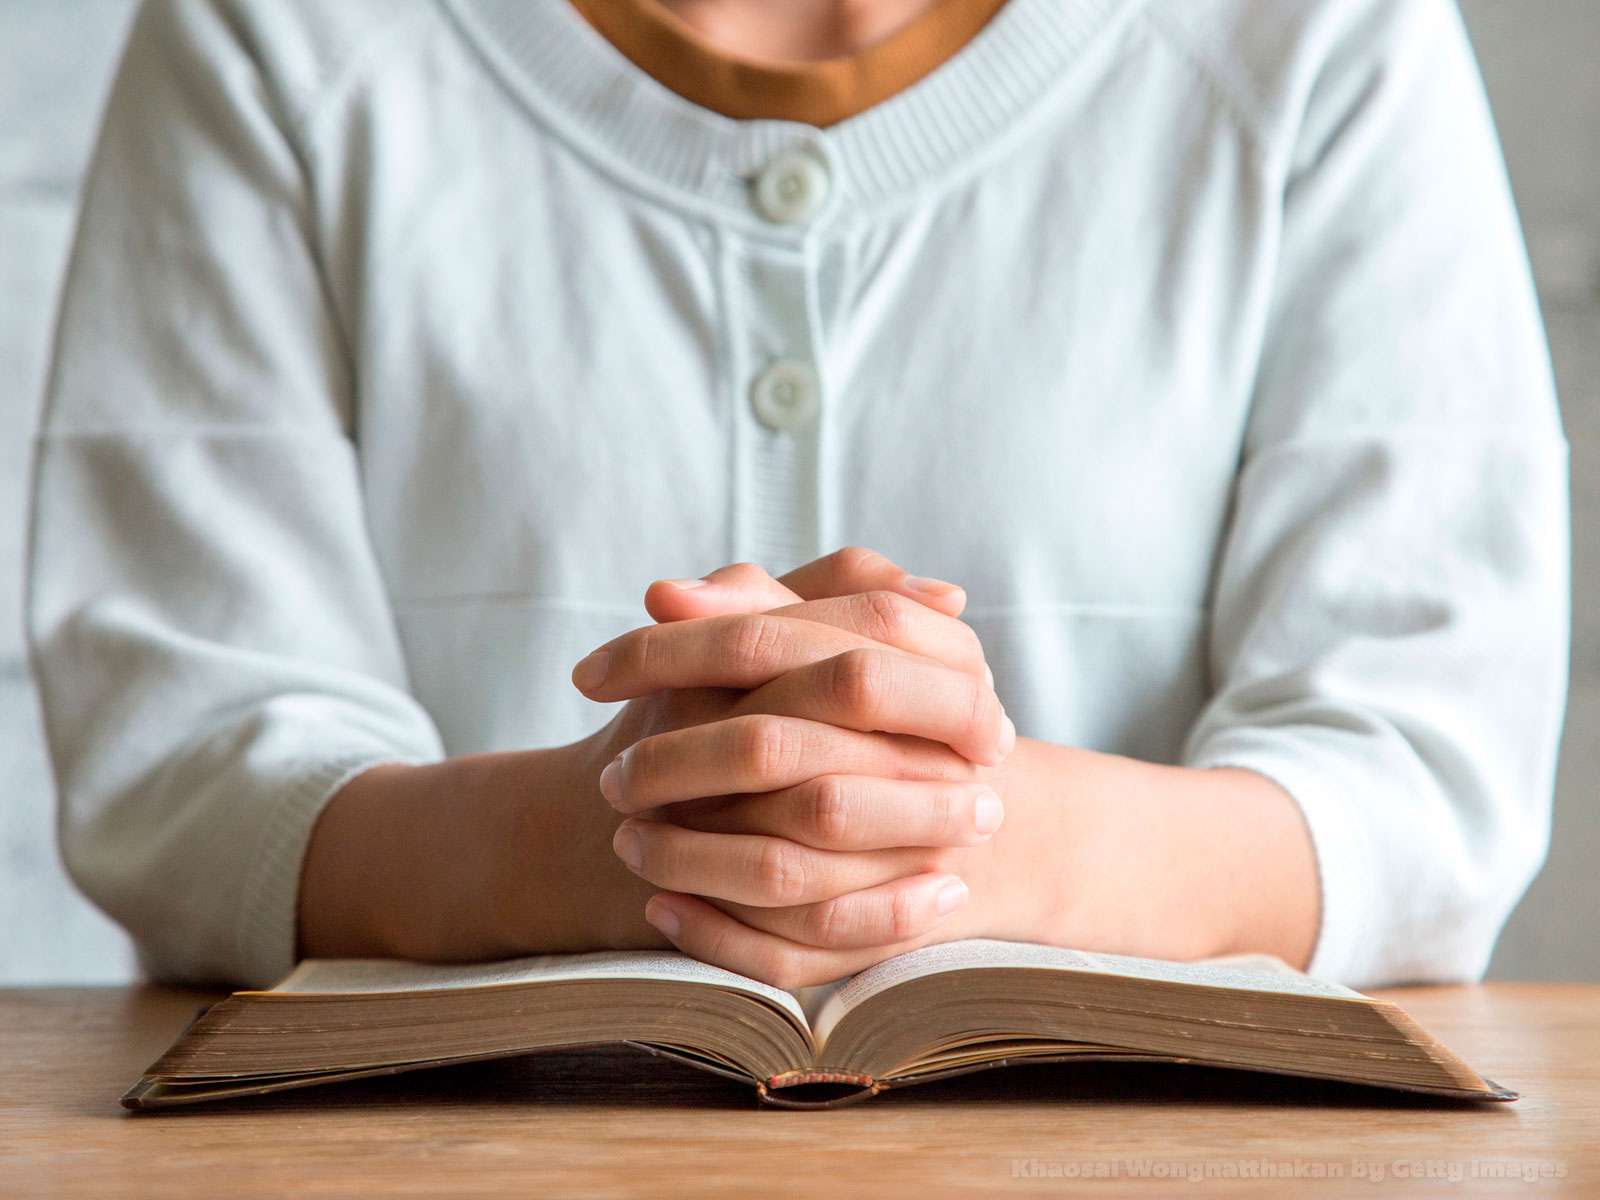 How To Improve Prayer Life